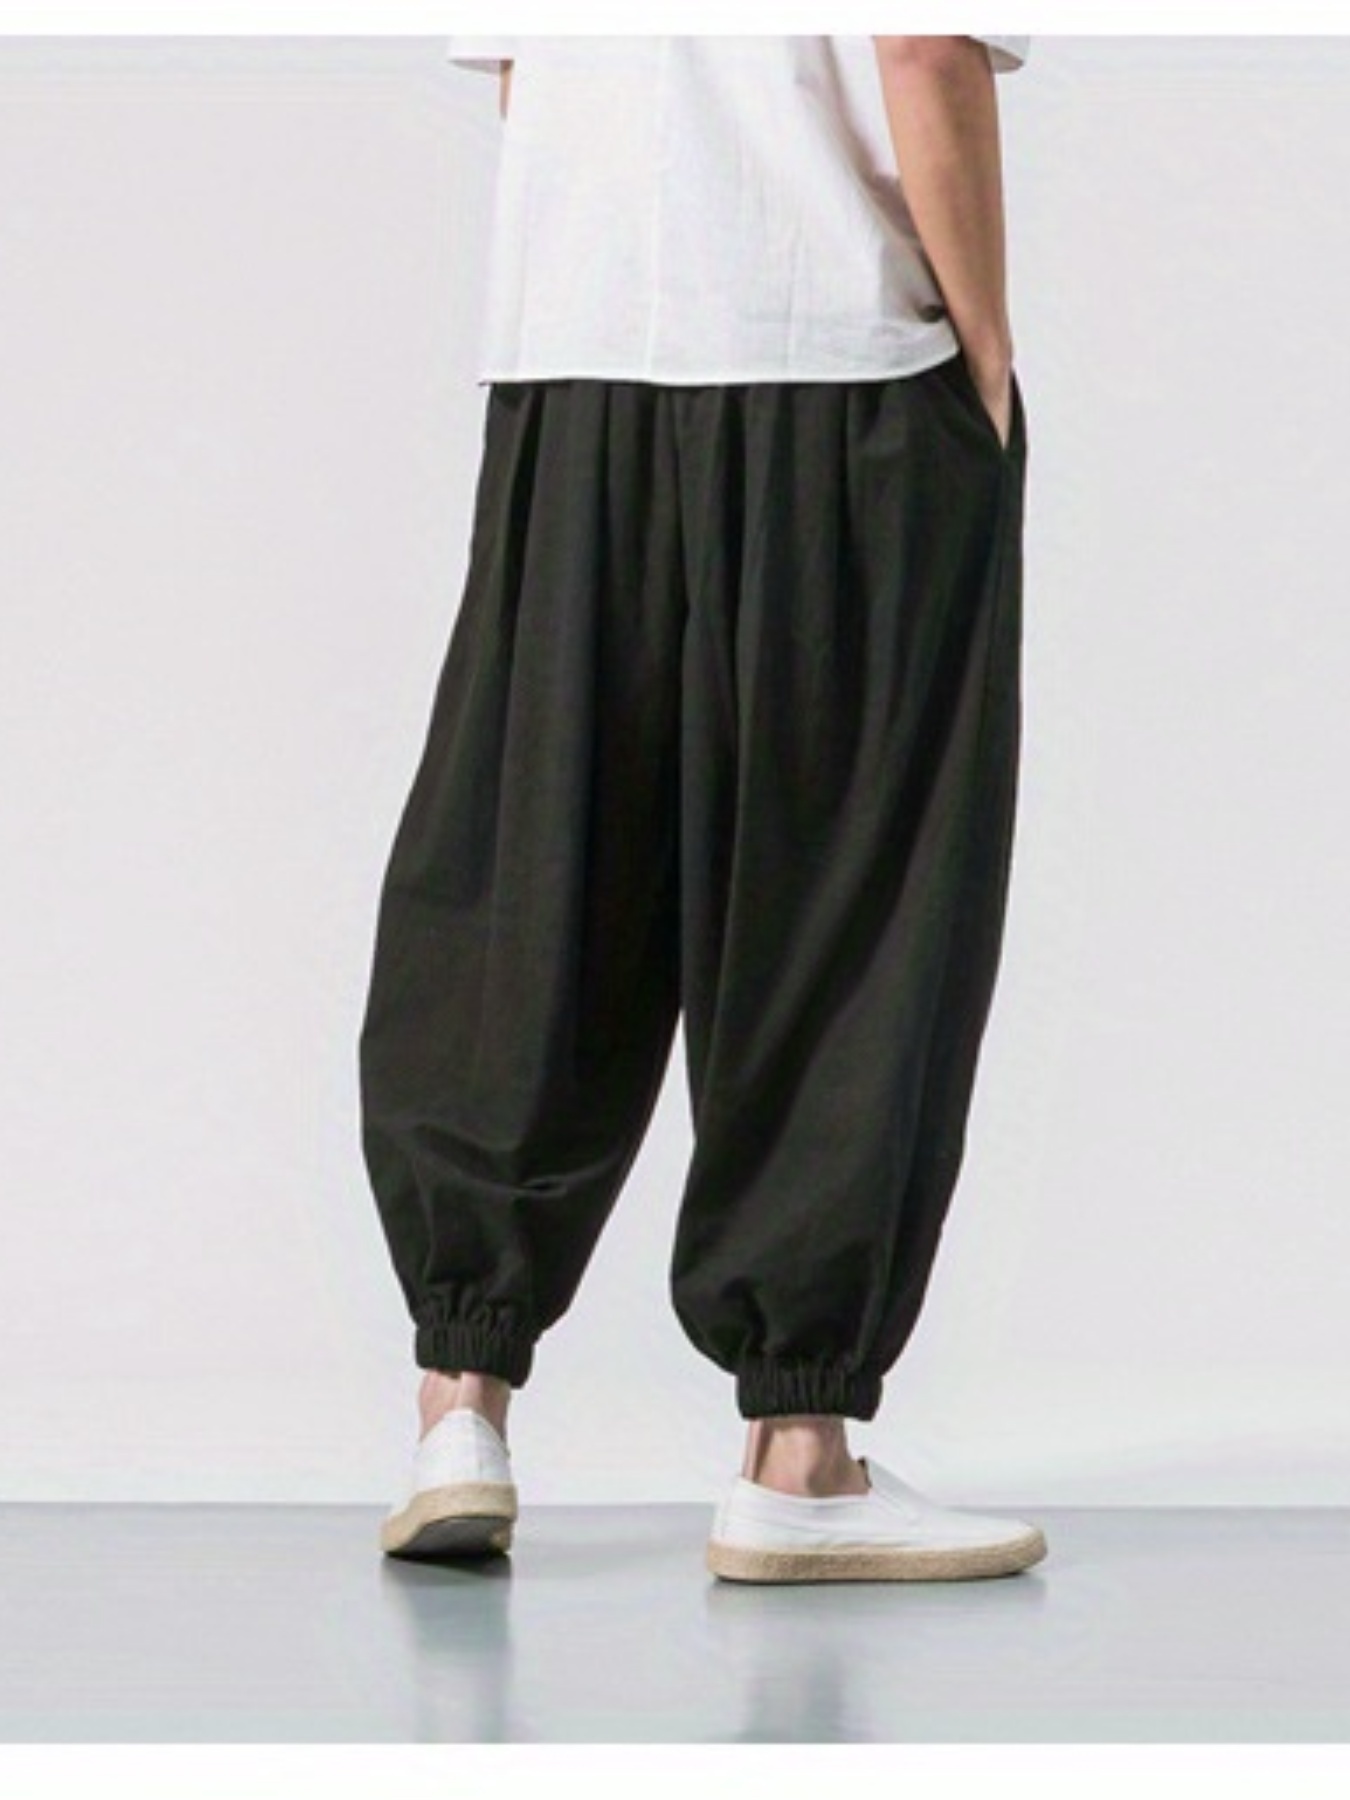 Men's Stylish Harem Pants, Casual Cotton Drawstring Hip Hop Loose Pants For  Outdoor, Men's Clothing